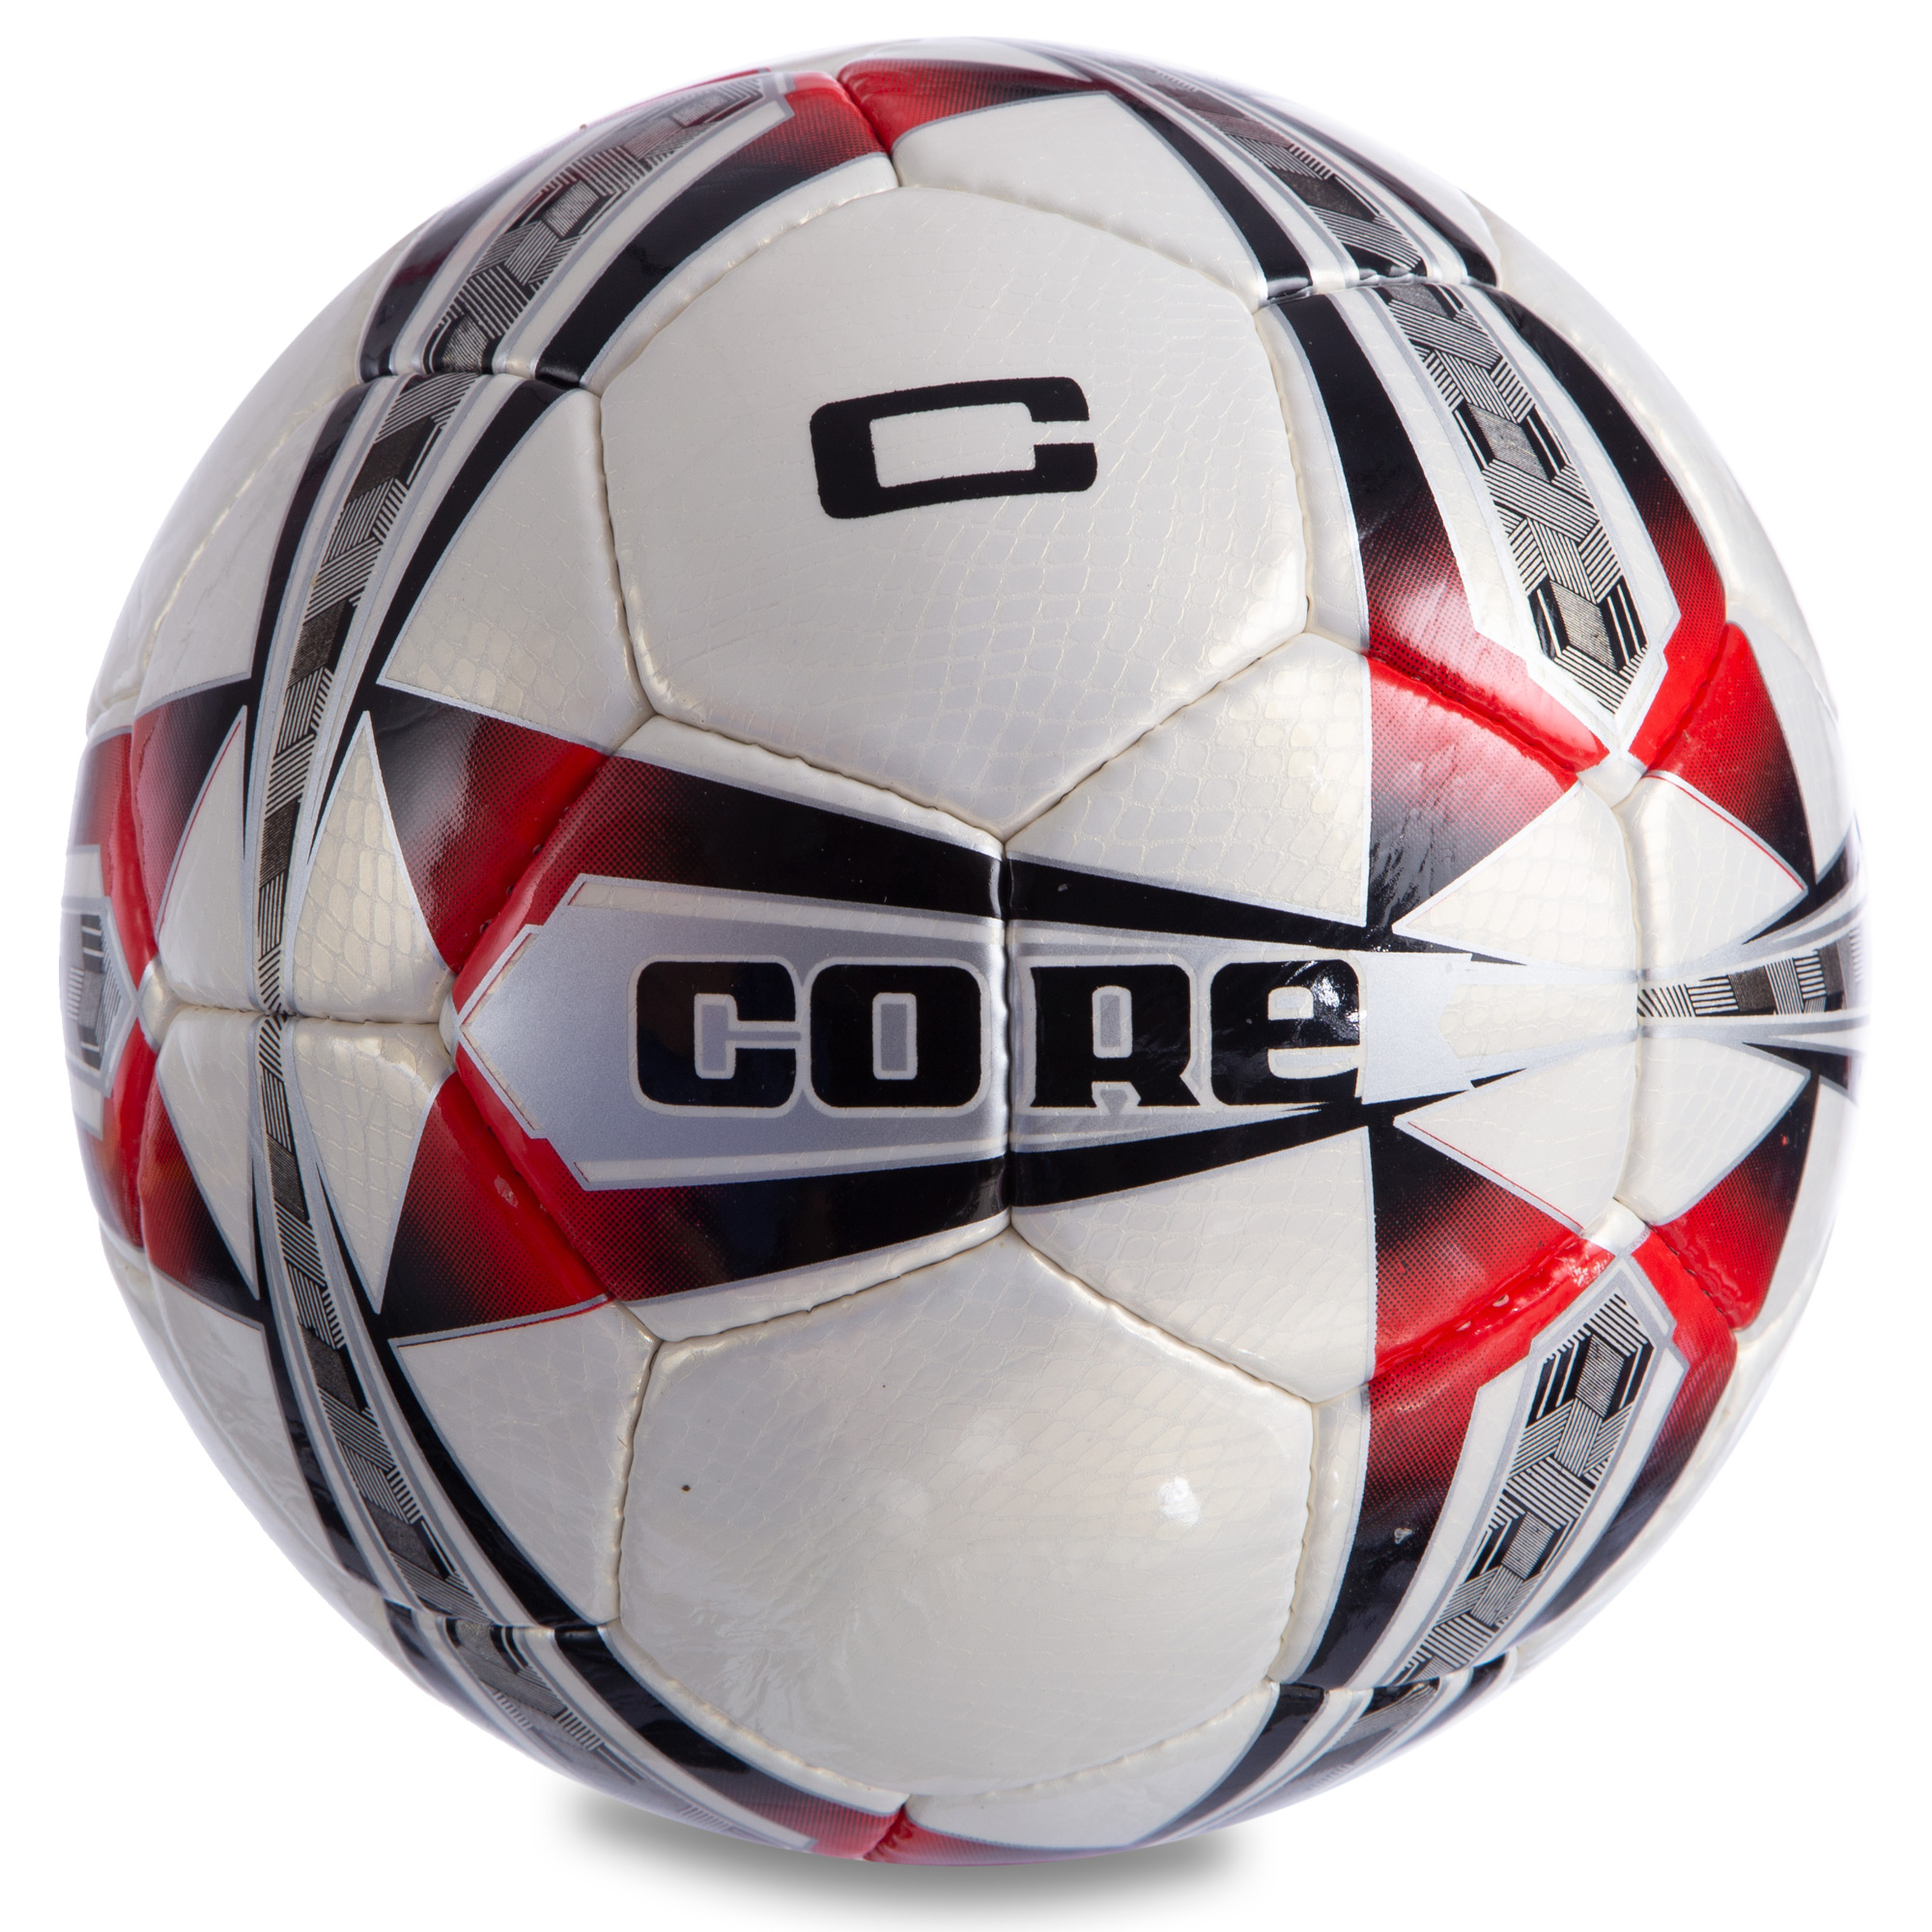 М'яч футбольний planeta-sport №5 PU CORE 5 STAR CR-007